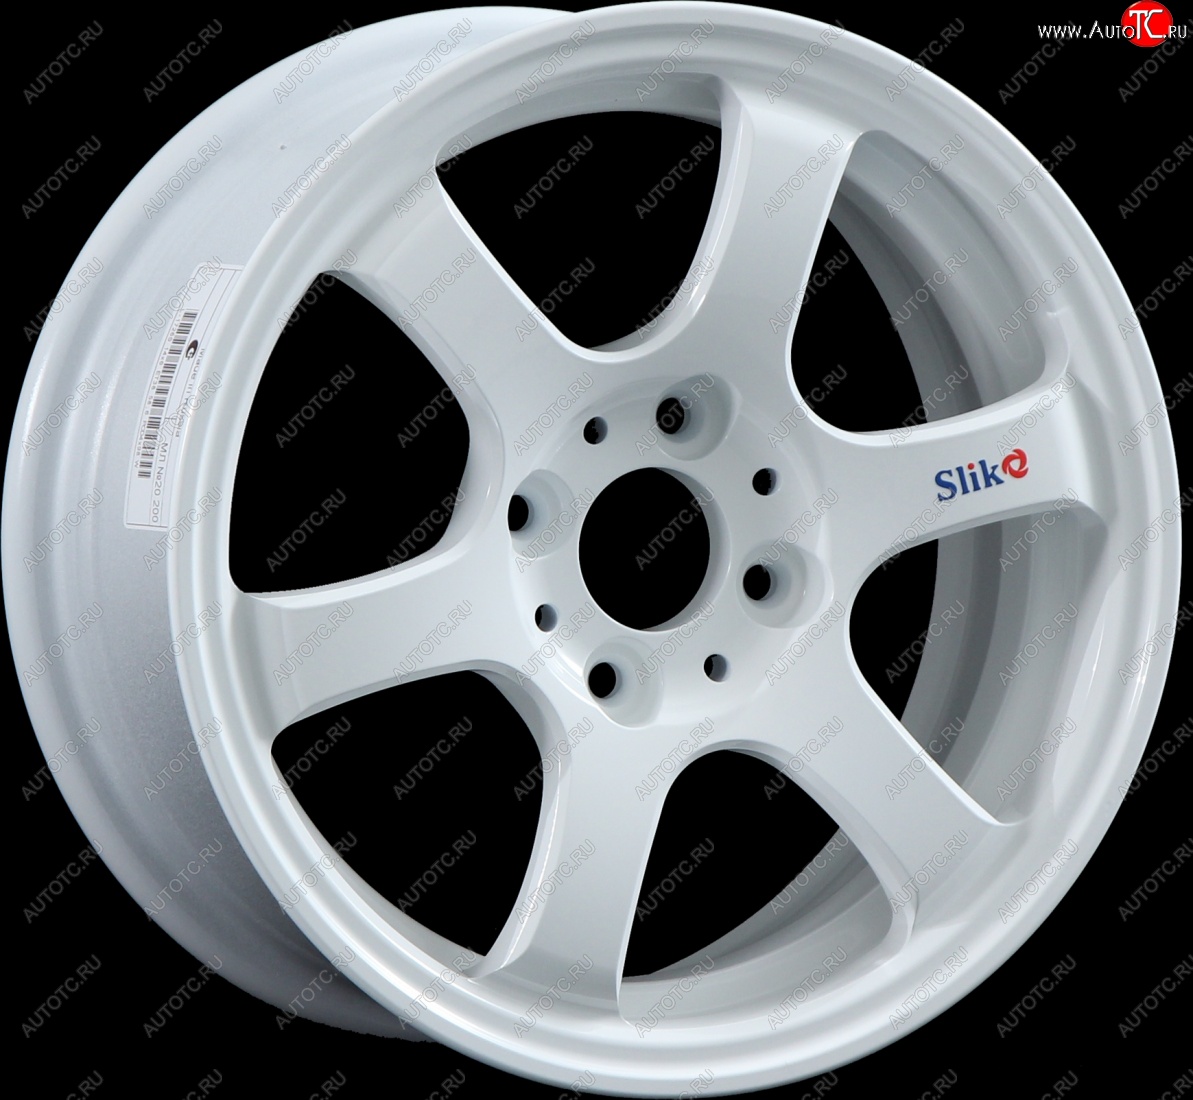 5 999 р. Кованый диск Slik Classik 5.5x14 (Белый W) Honda Fit Aria GD дорестайлинг седан (2002-2005) 4x100.0xDIA56.1xET45.0 (Цвет: Белый W)